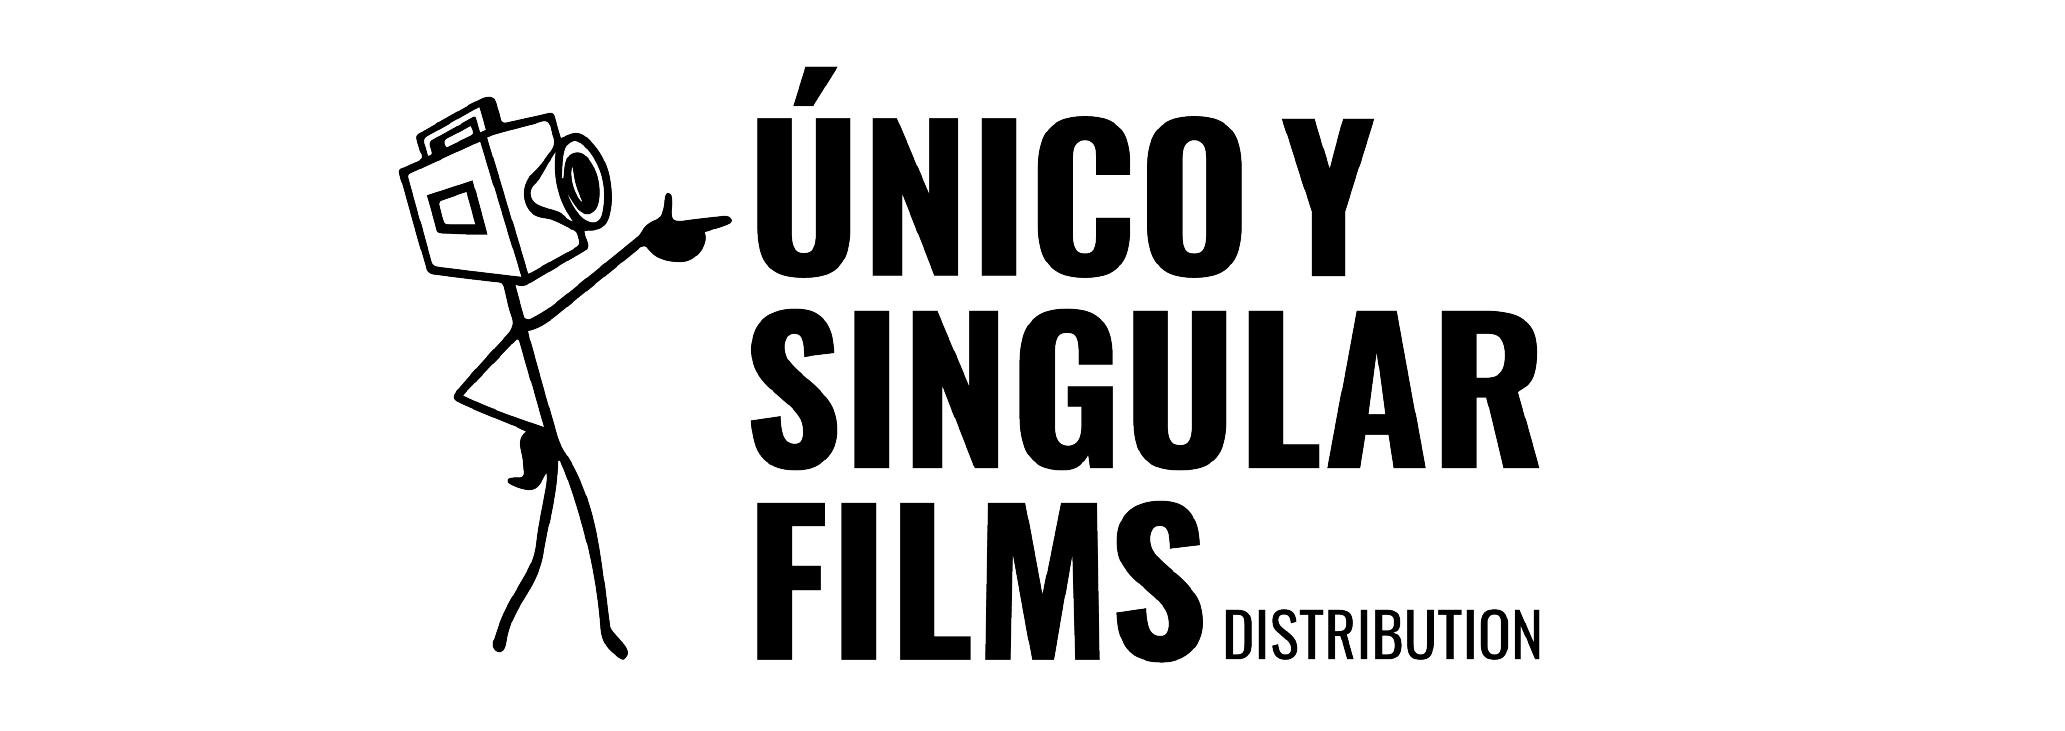 Logotips Clients Factoria-Único y Singular Films